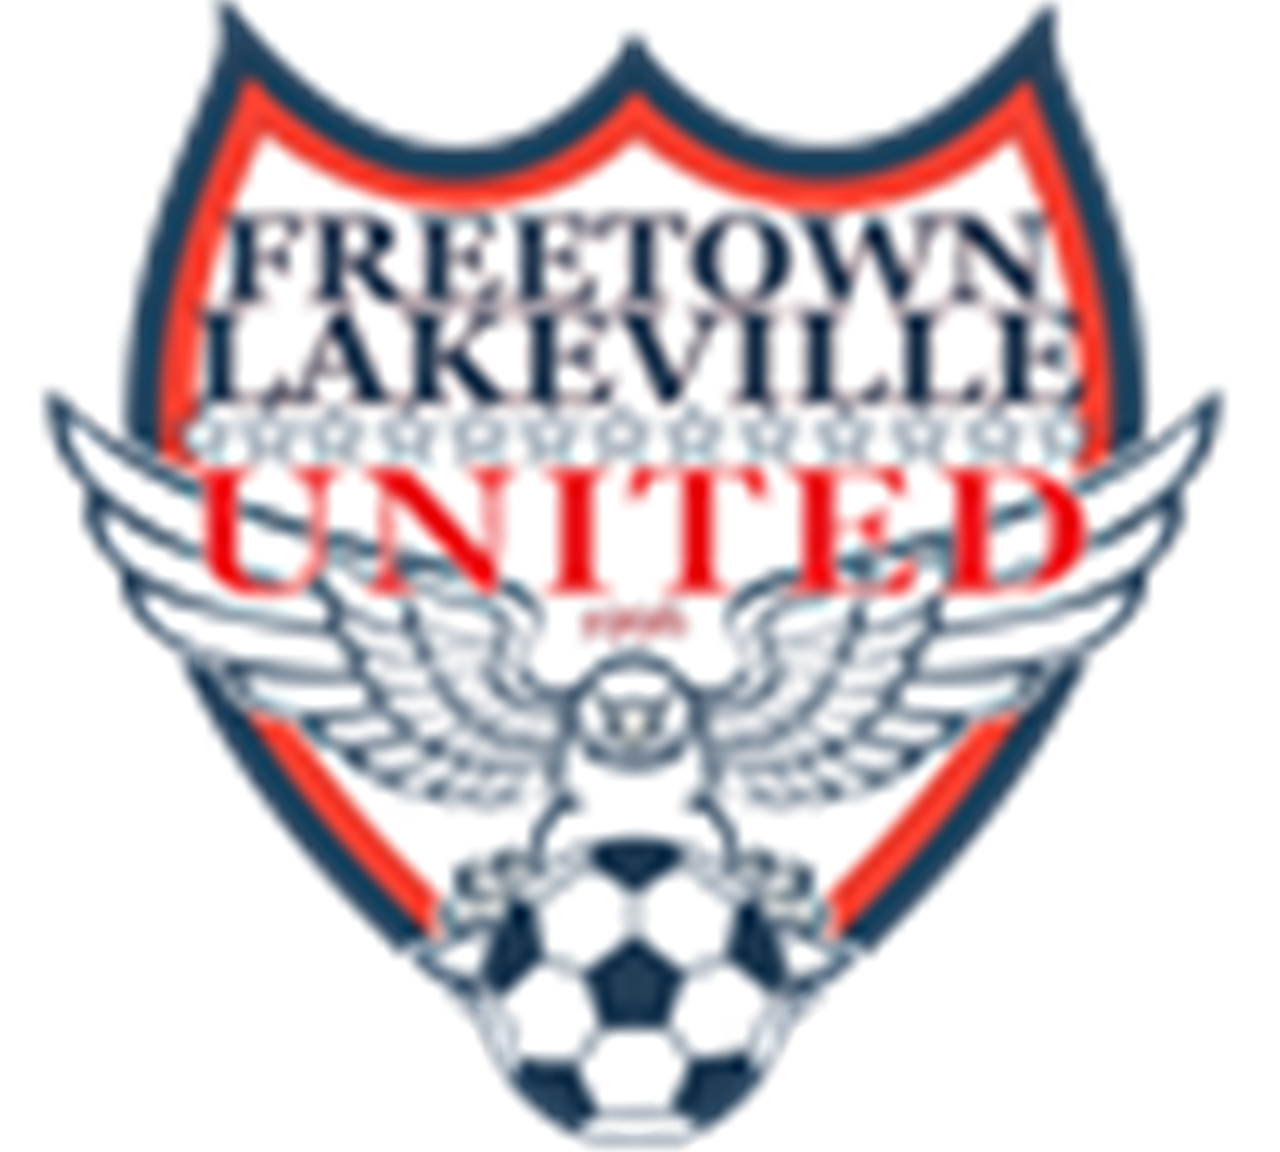 freetown lakeville travel soccer